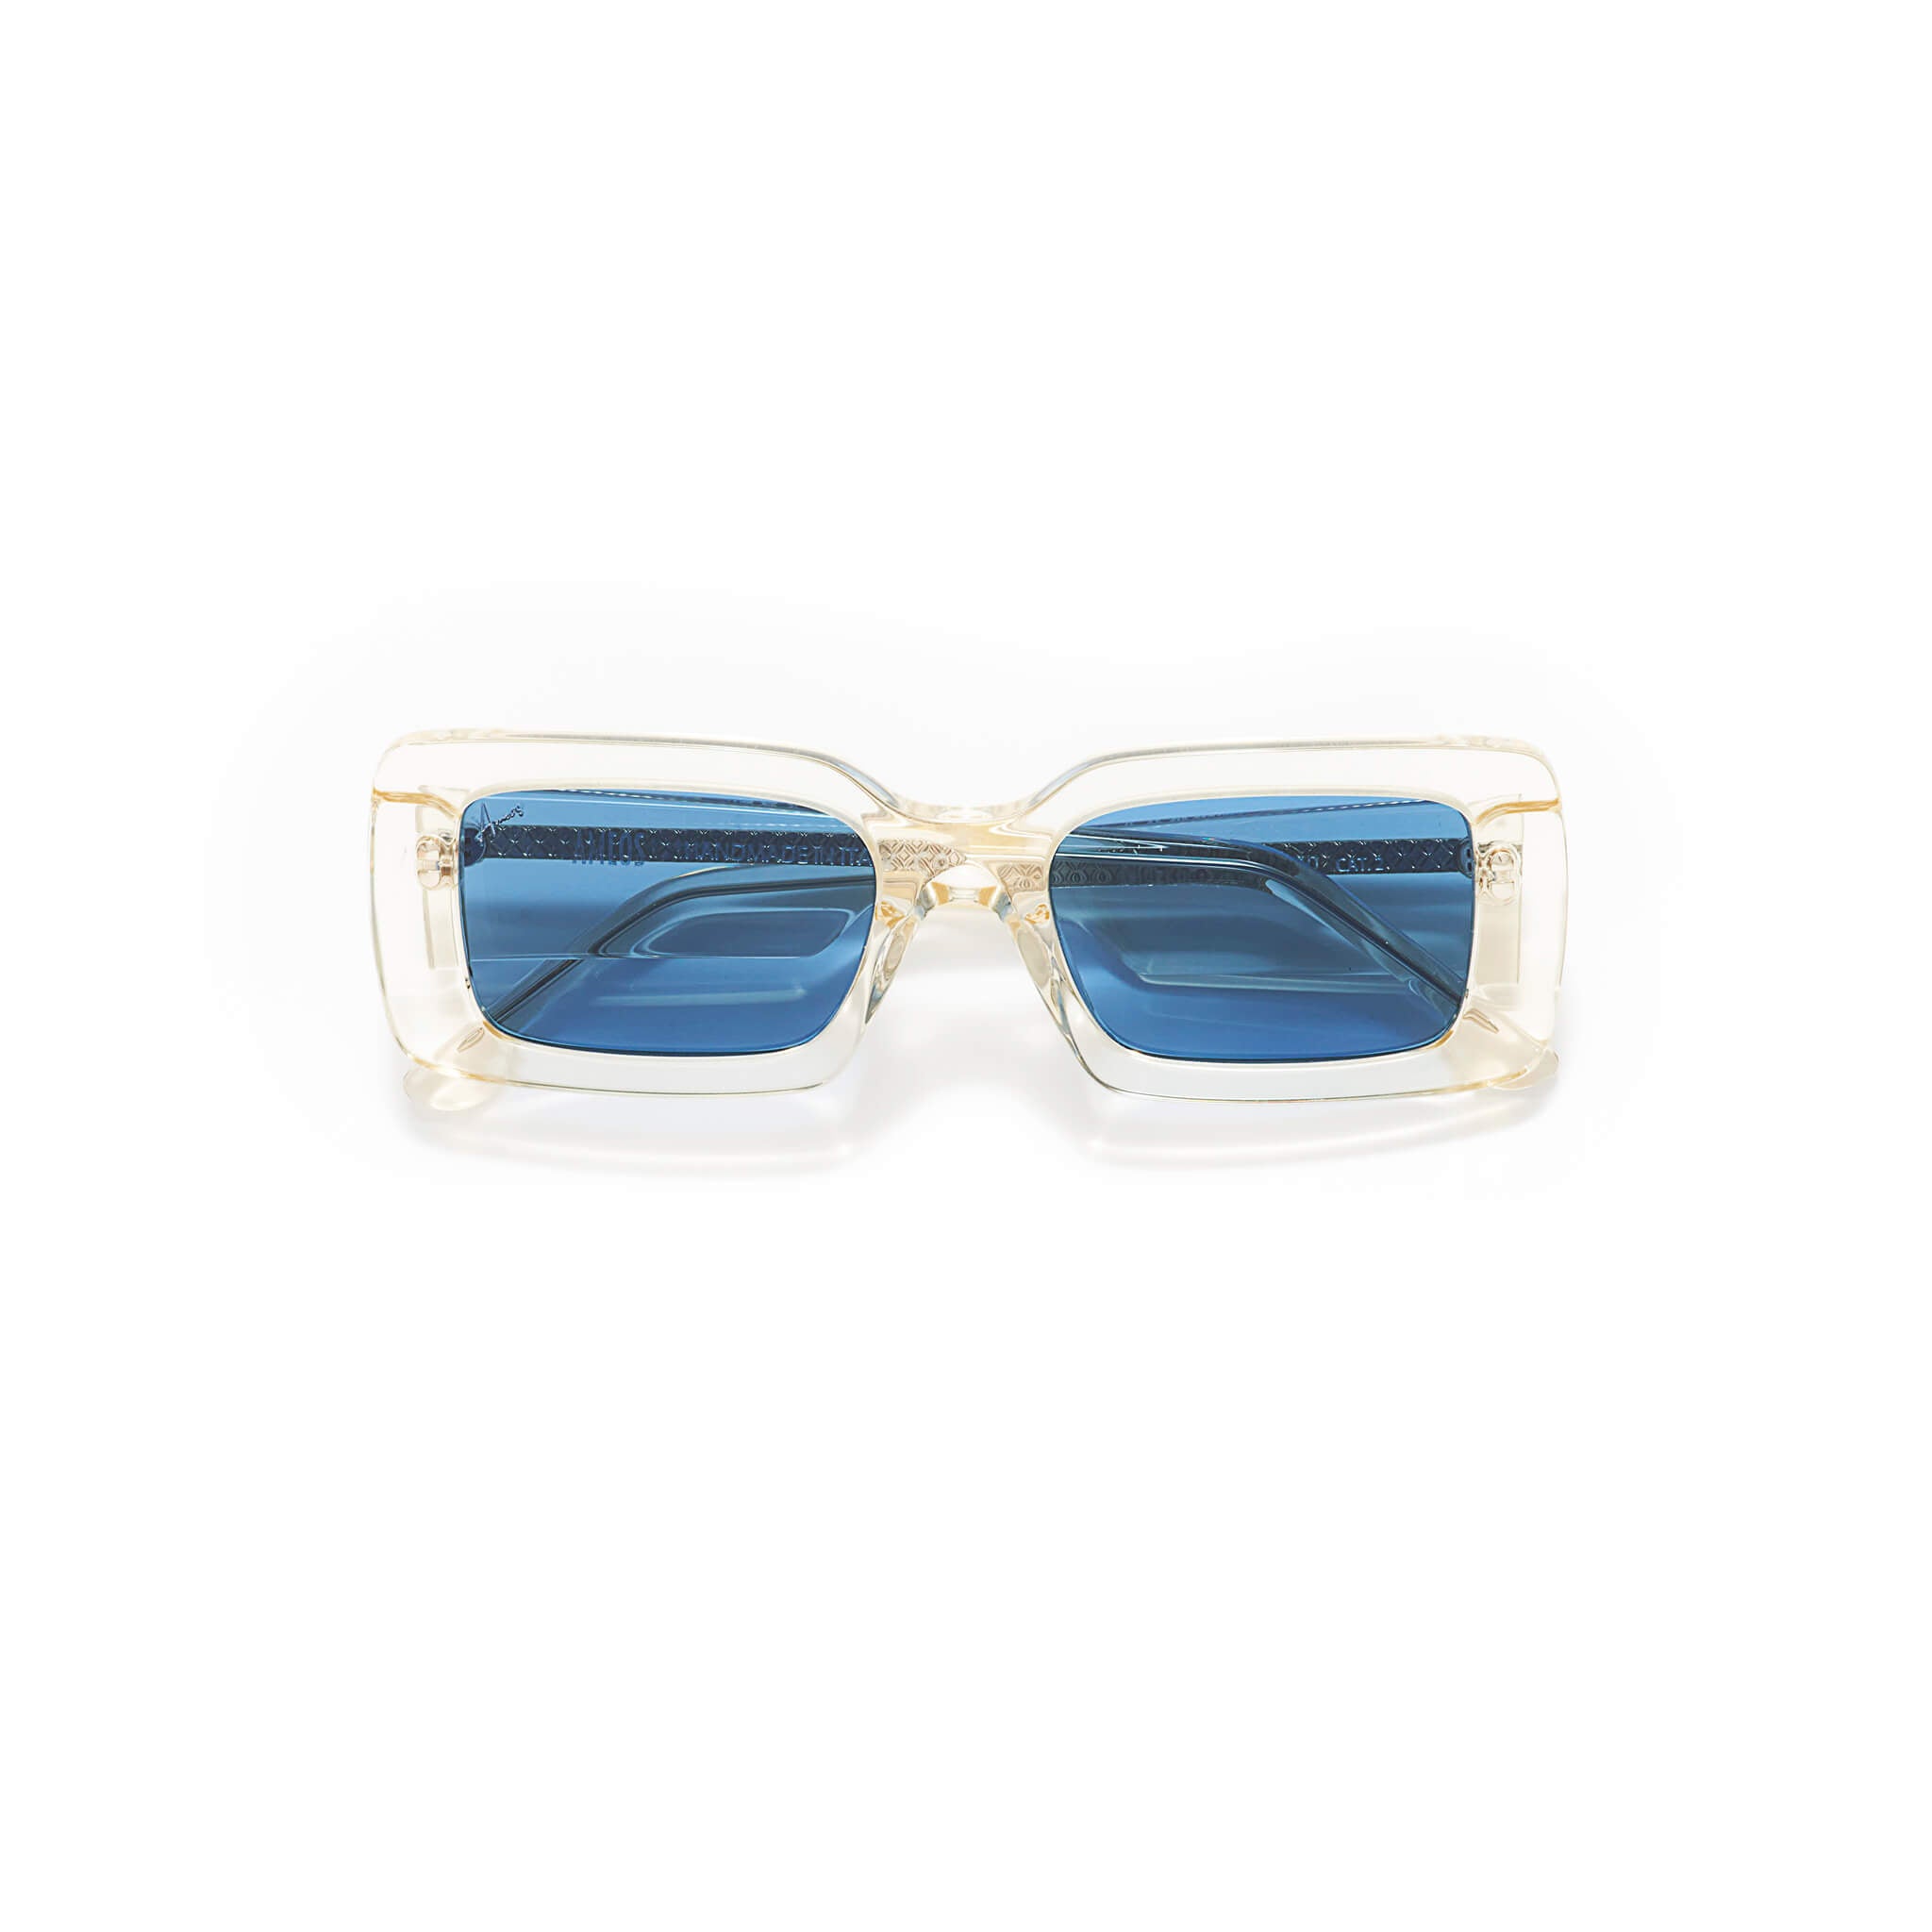 Transparent rectangular frames with blue lenses sunglasses